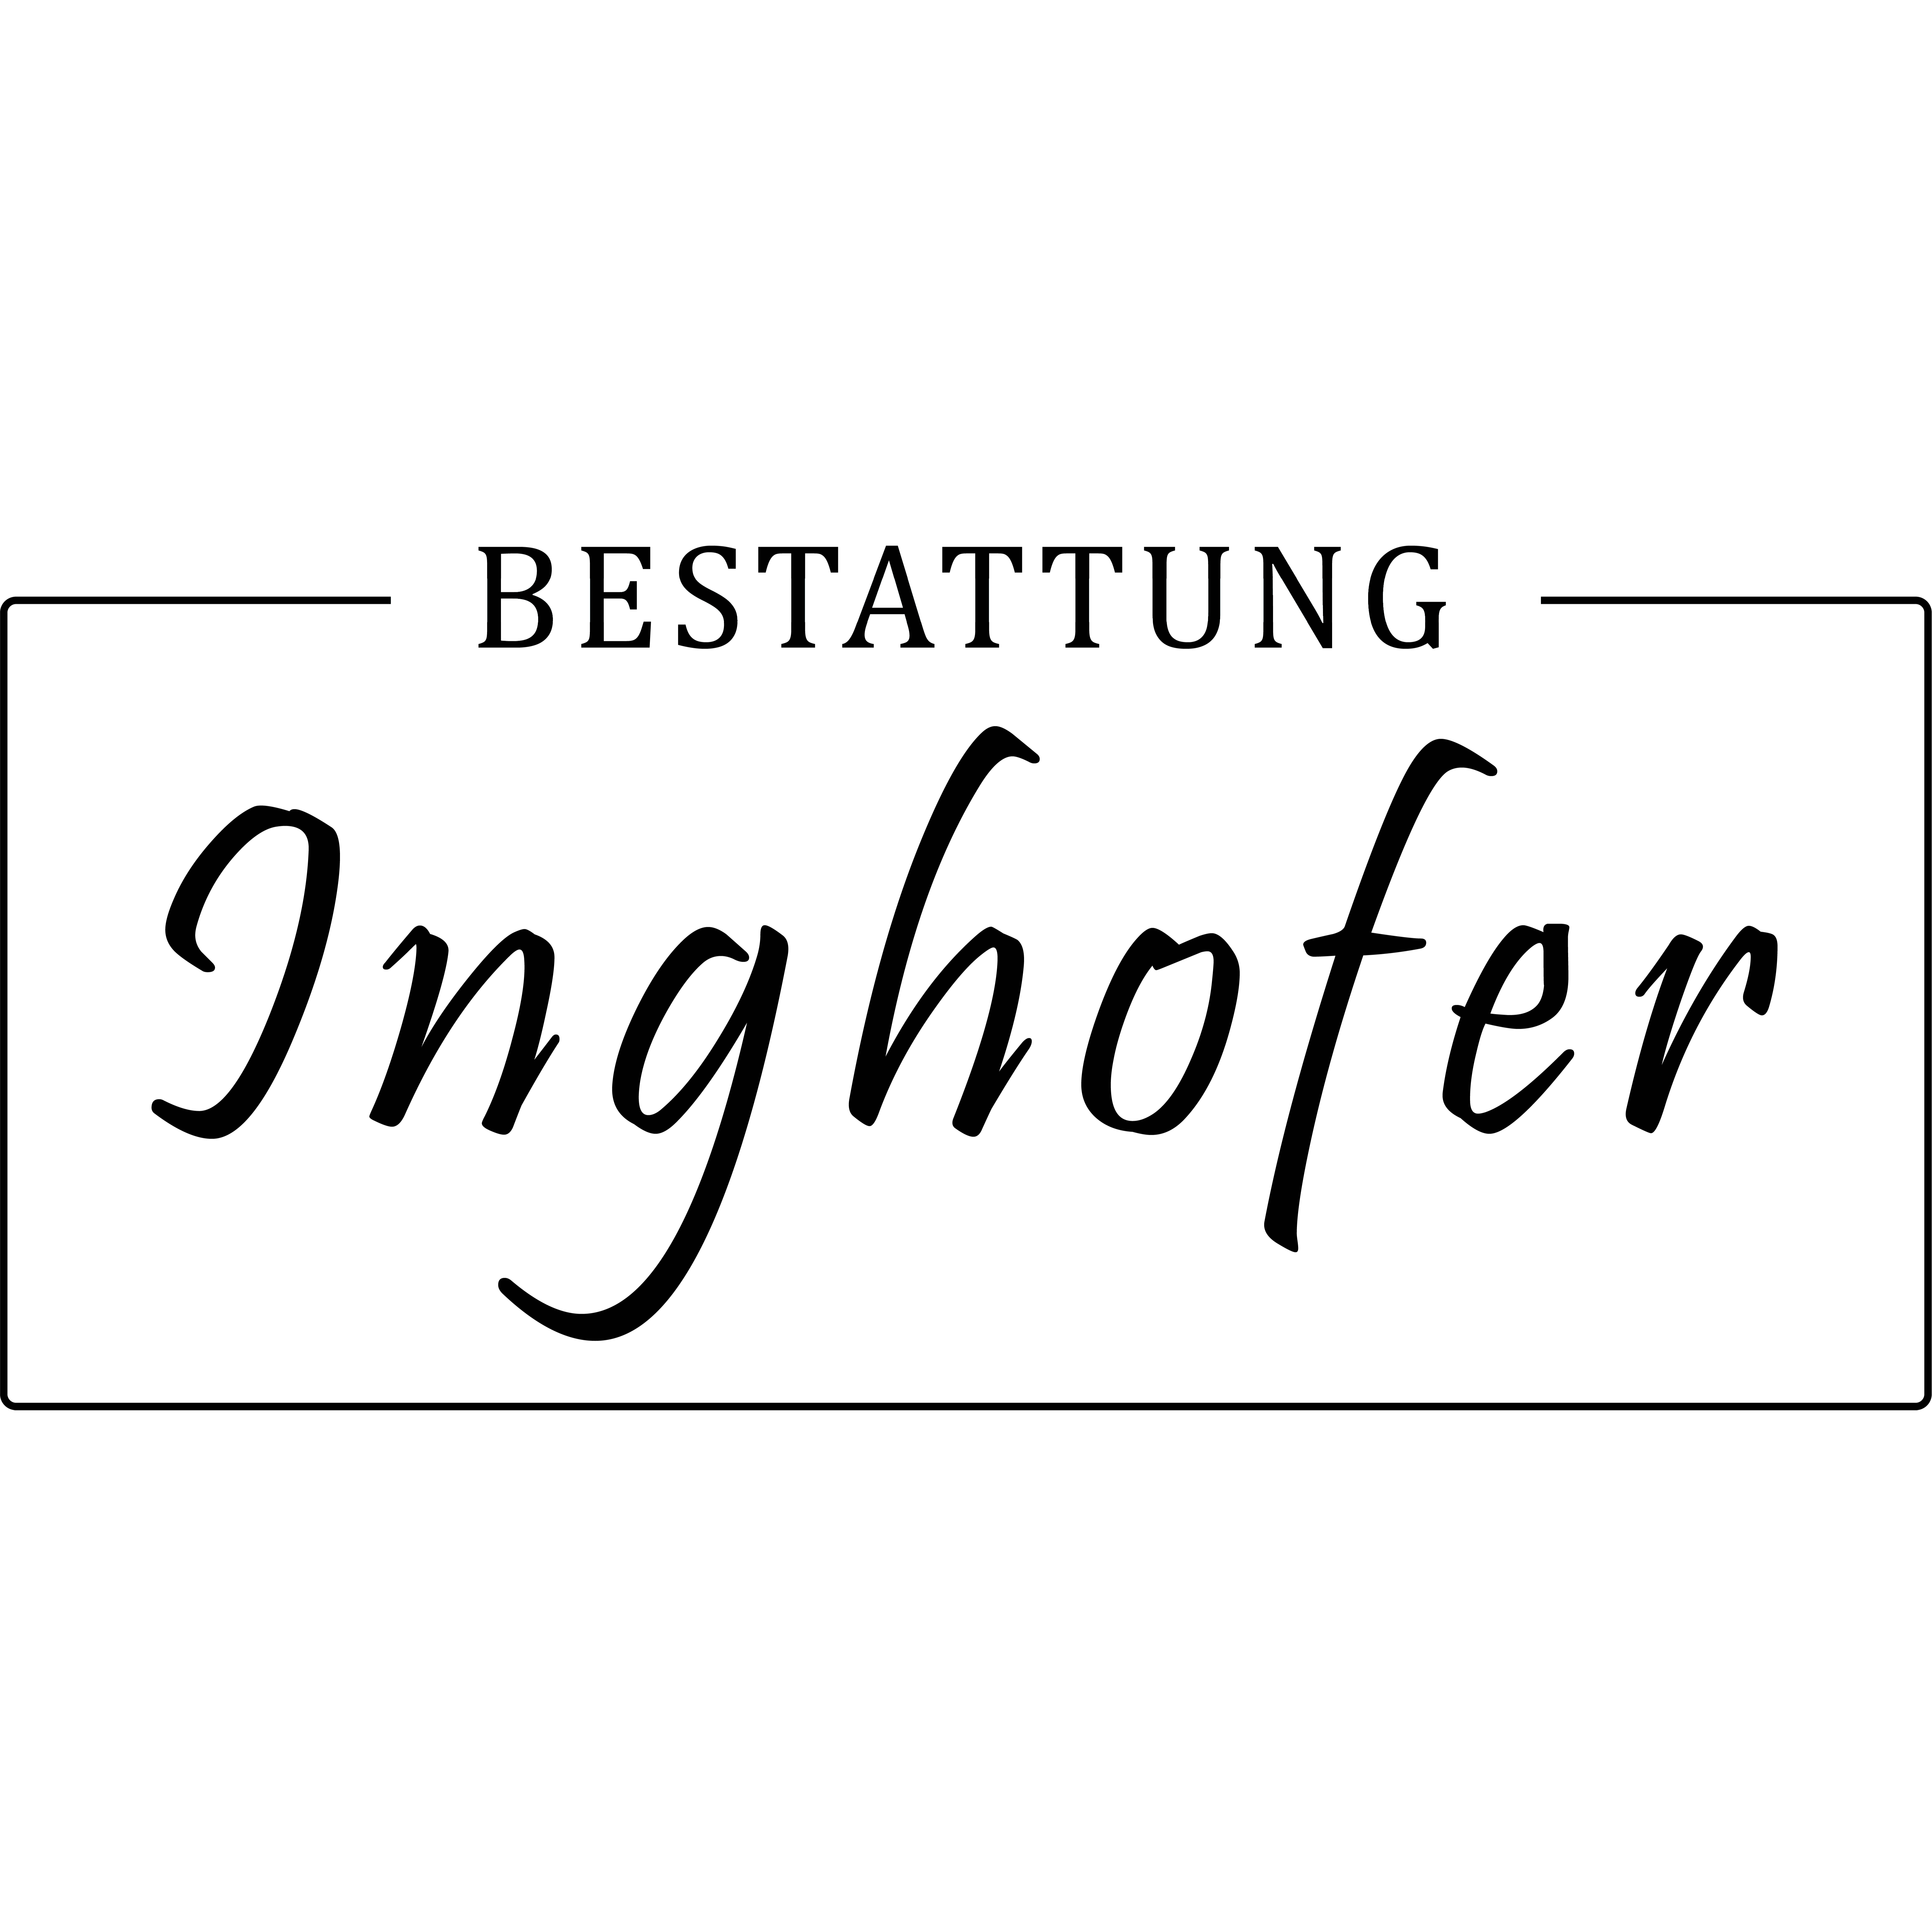 Bestattung Robert Inghofer Logo